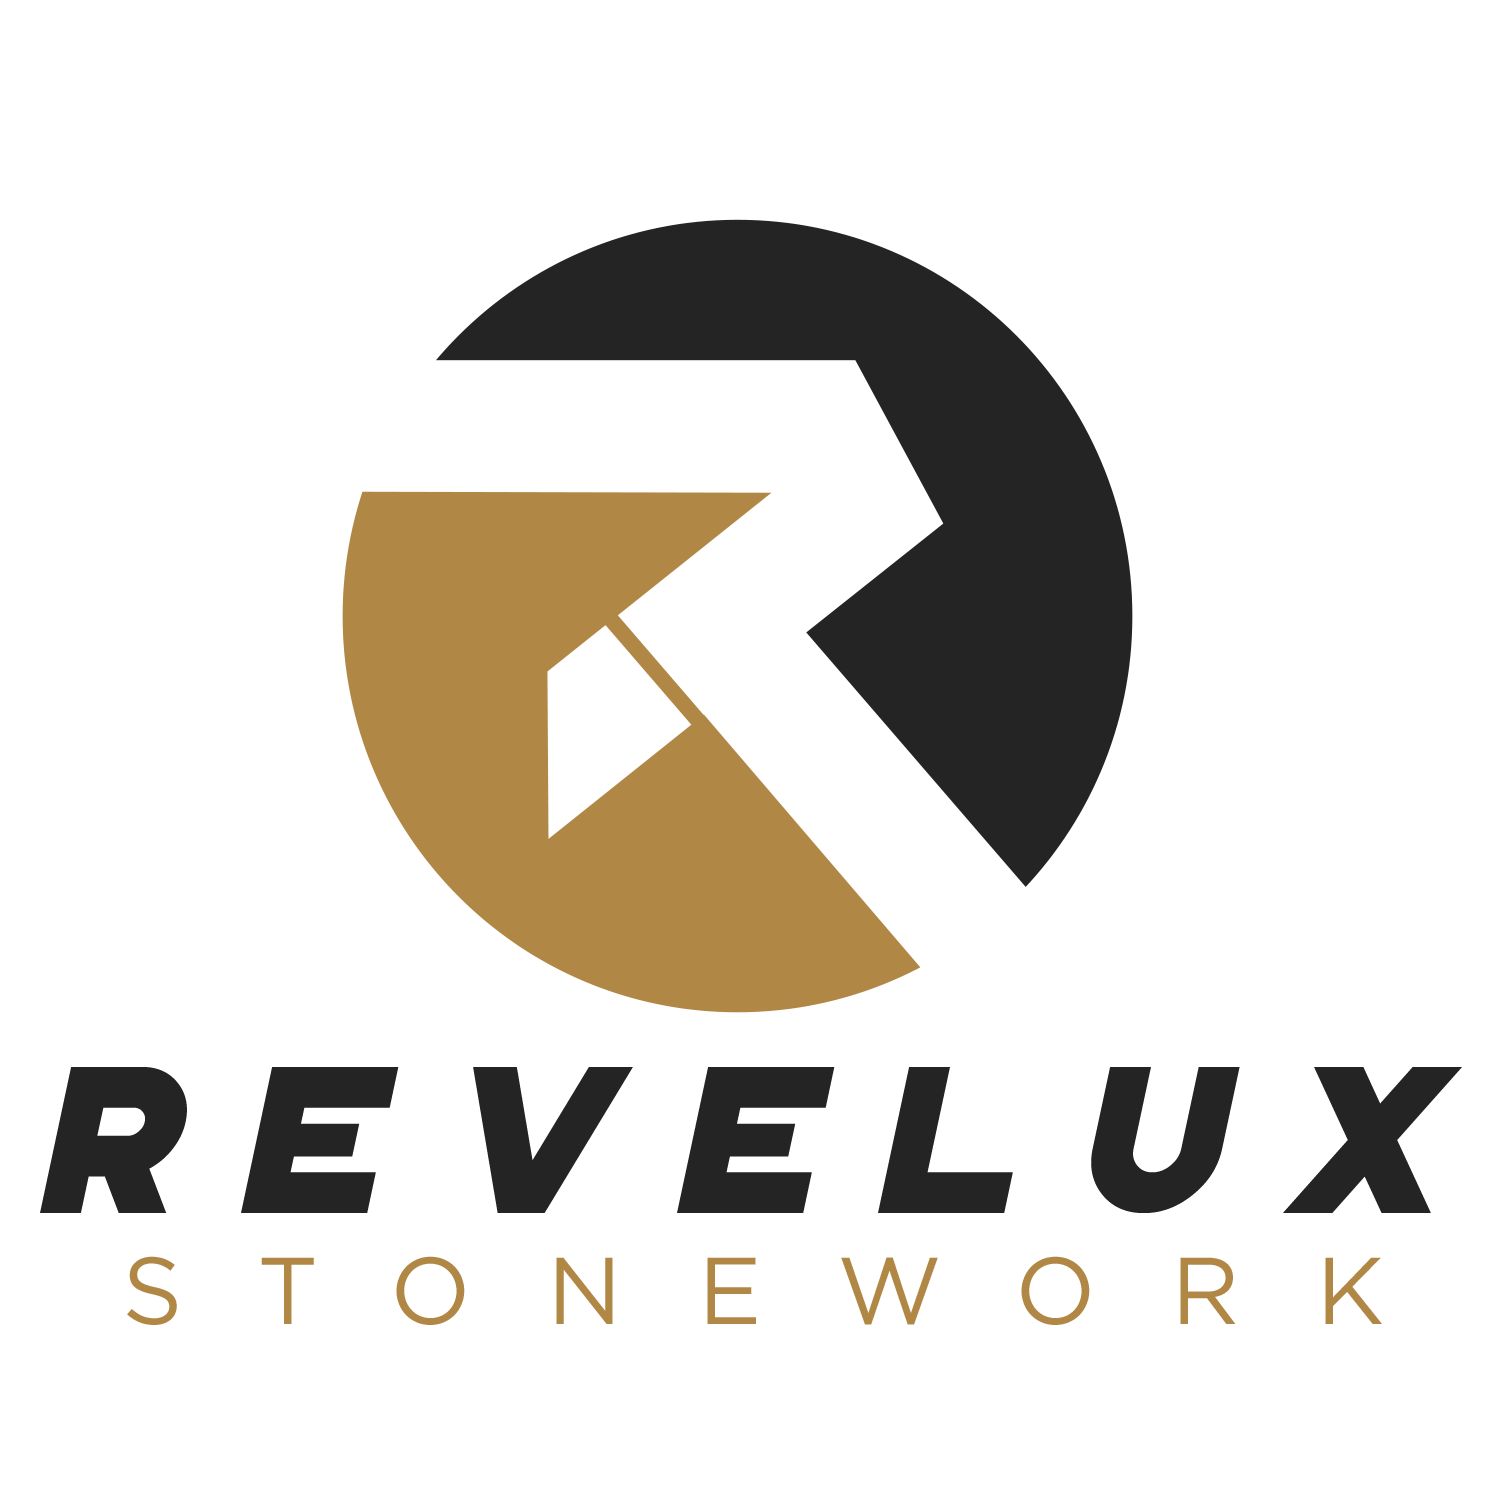 Revelux Stonework